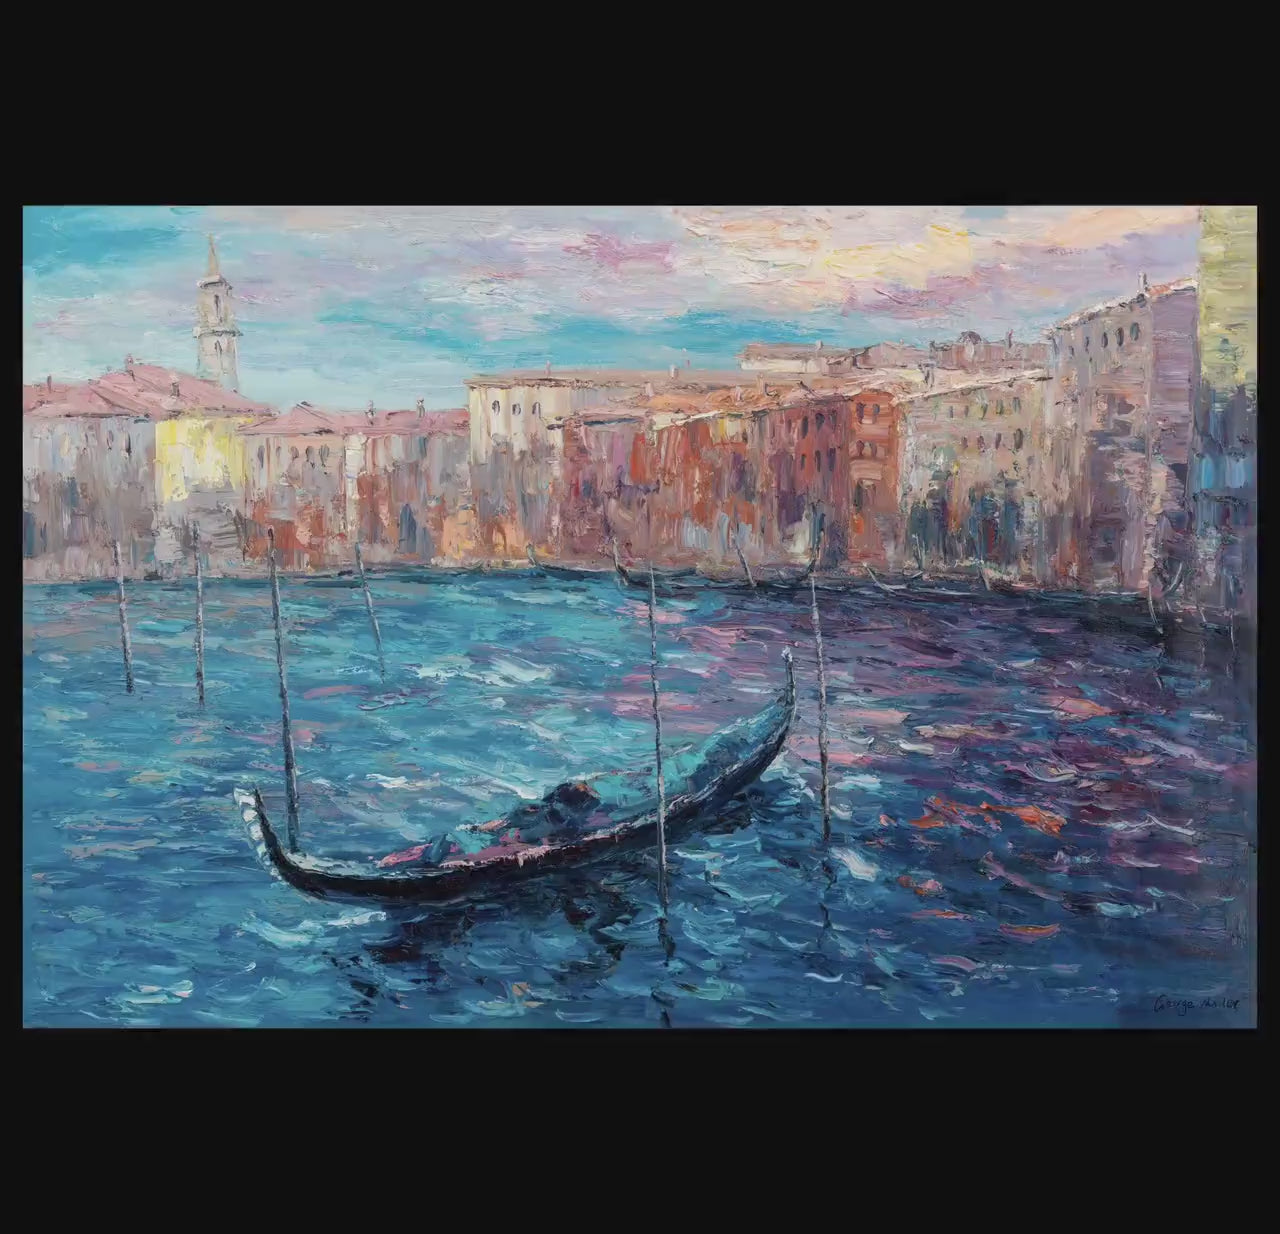 Oil Painting Venice Grand Canal Gondola, Canvas Art, Wall Art Painting, Cityscape, Large Canvas Art, Handmade, Modern Painting, Impasto